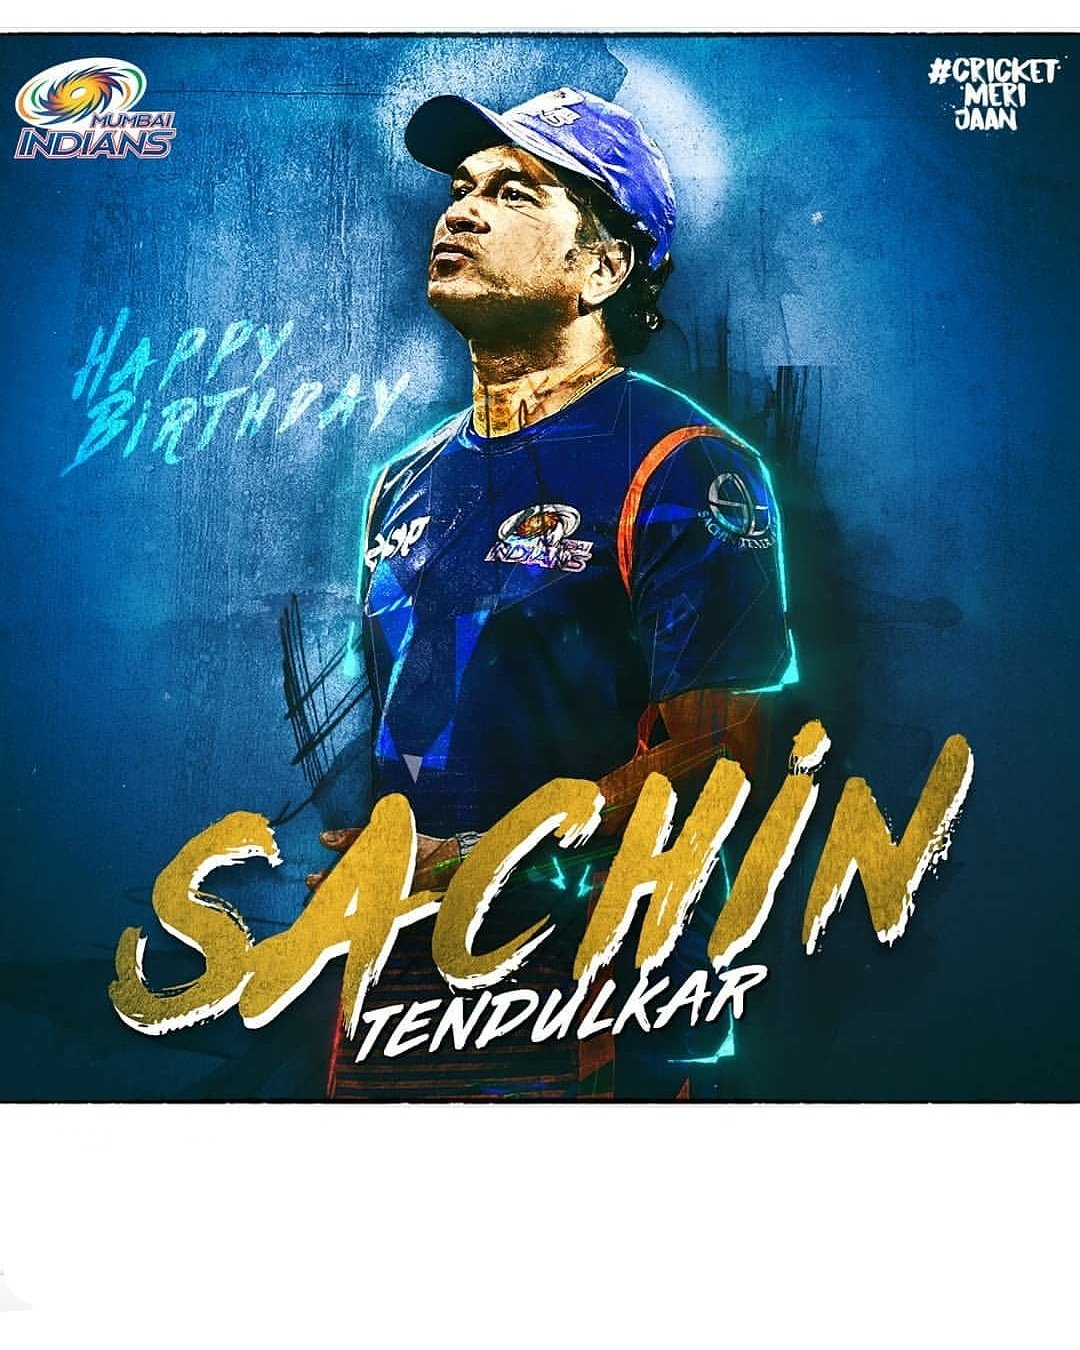 There will never be another Sachin Tendulkar
Happy birthday Master blaster     